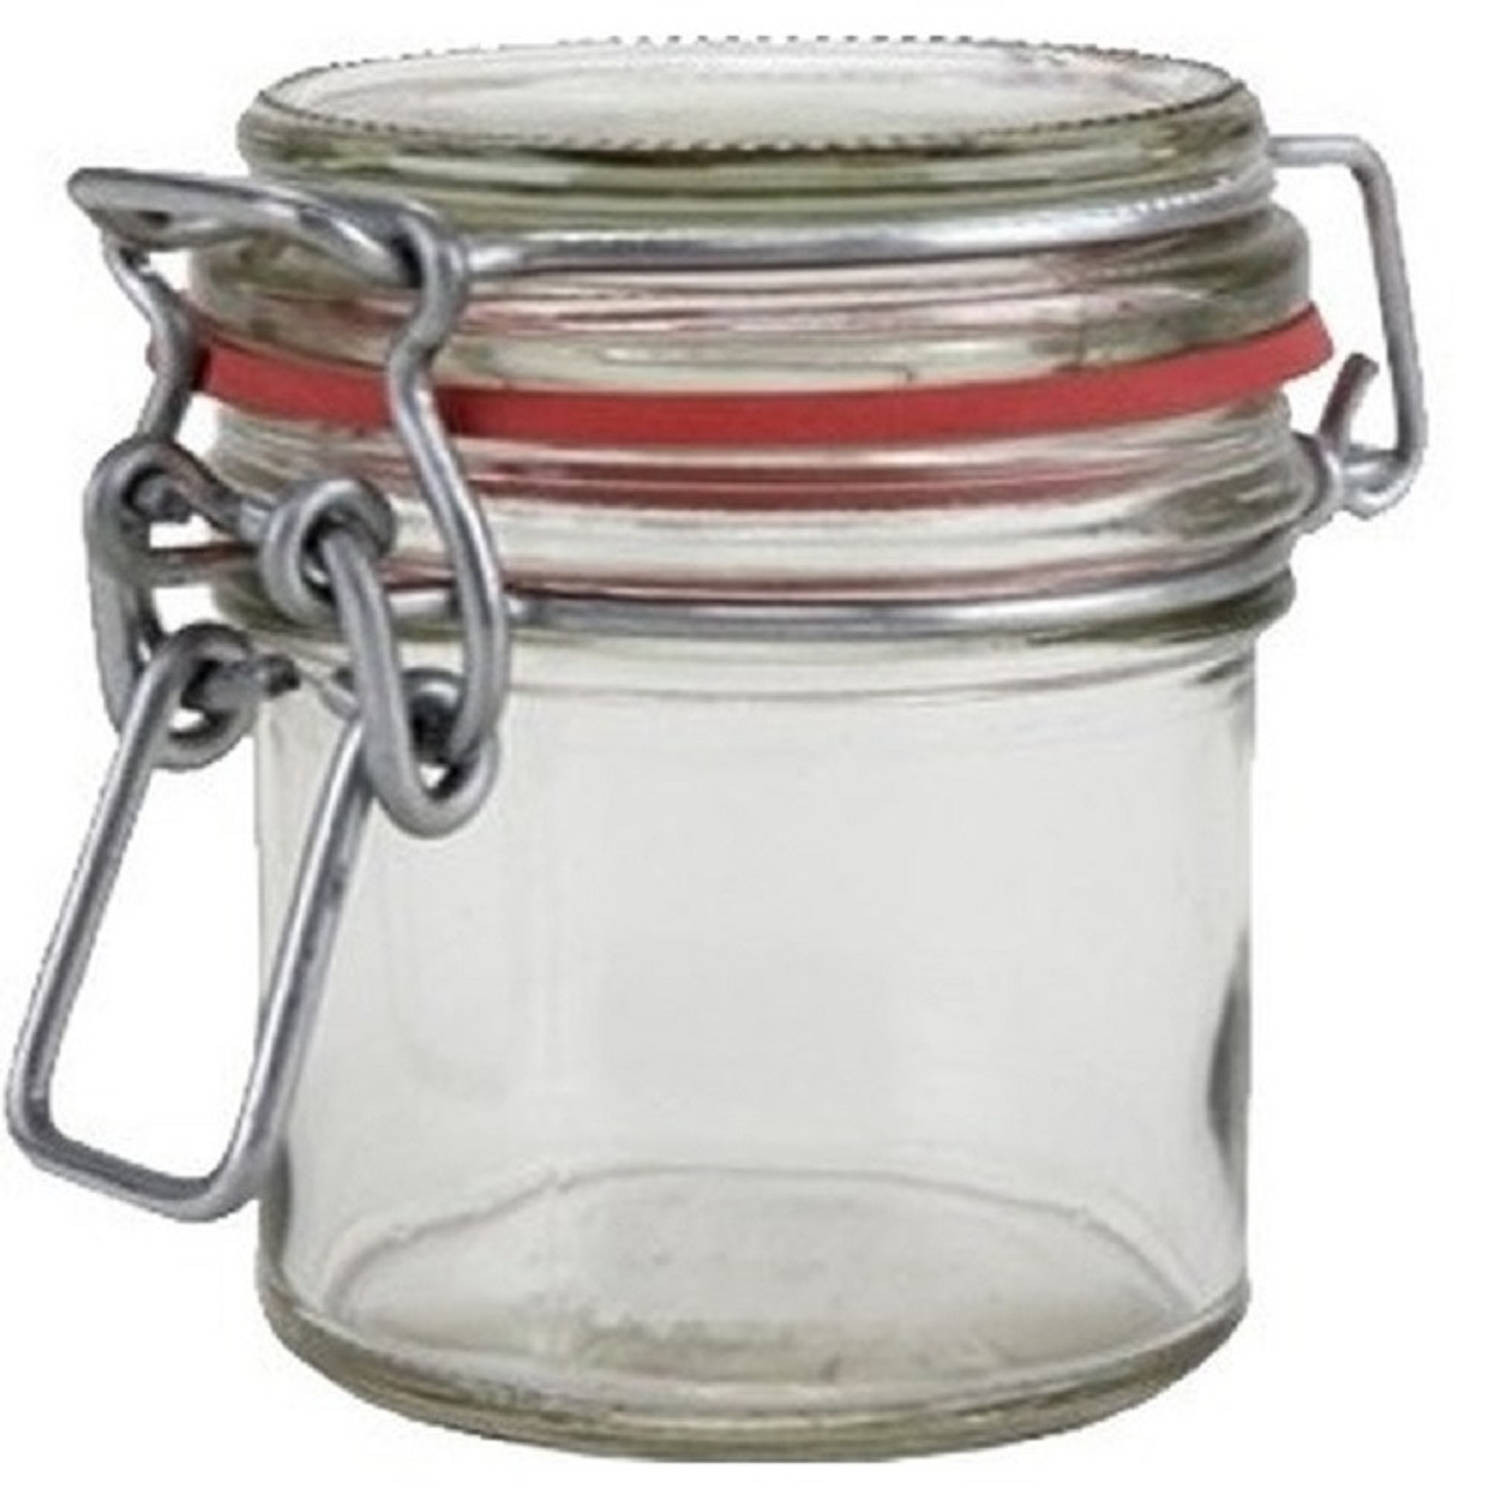 1x Glazen confituren mini pot/weckpot 100 ml met beugelsluiting en rubberen ring - Weckpotten